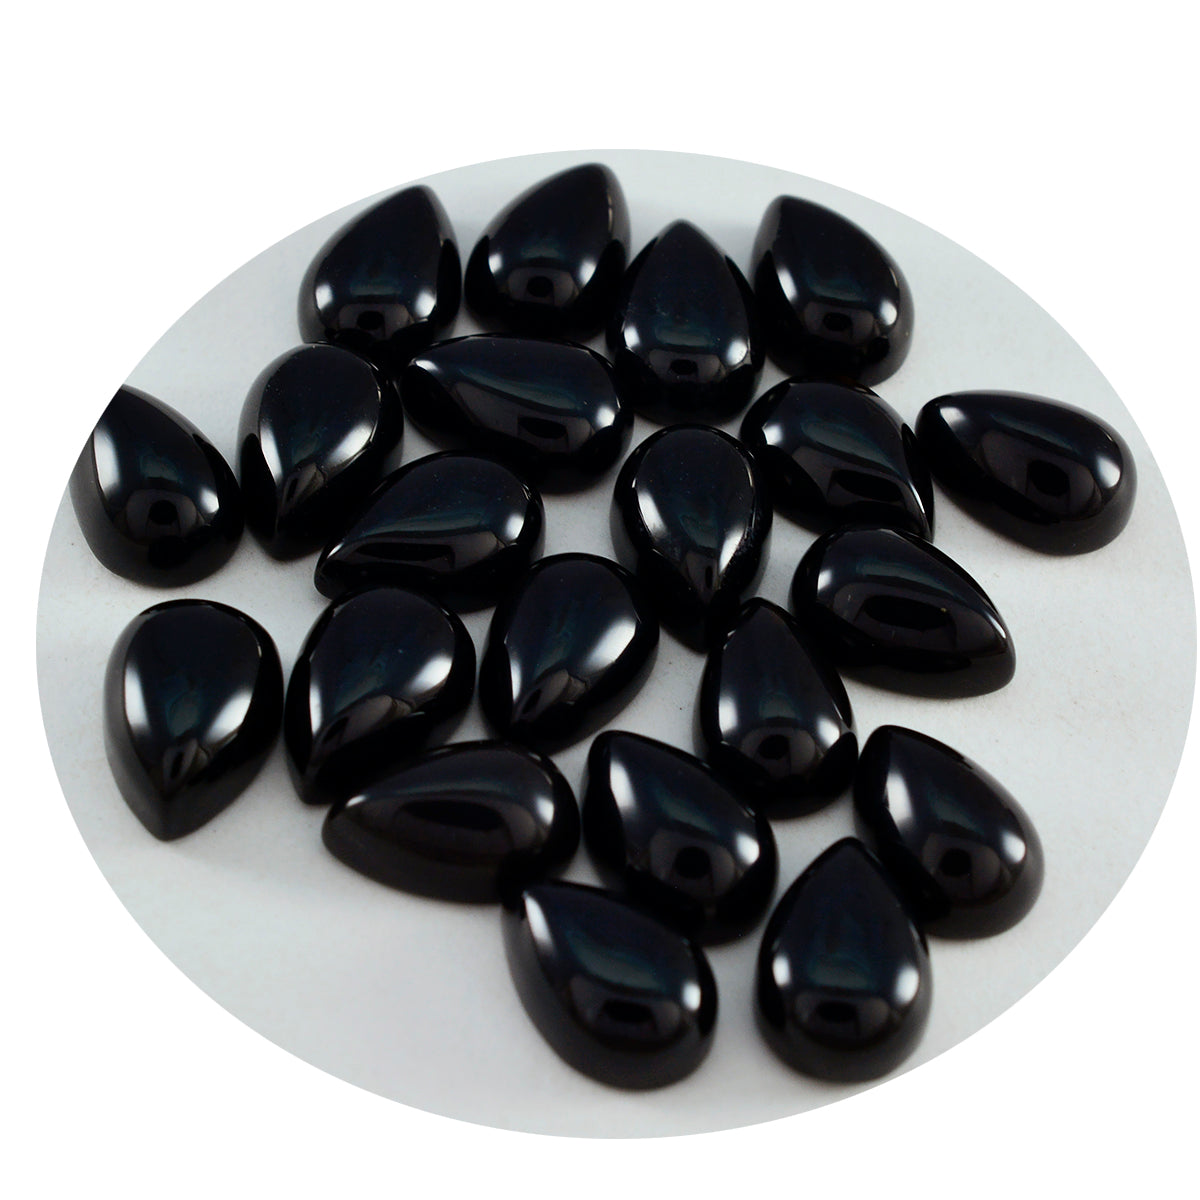 Riyogems 1PC Black Onyx Cabochon 5x7 mm Pear Shape awesome Quality Loose Stone